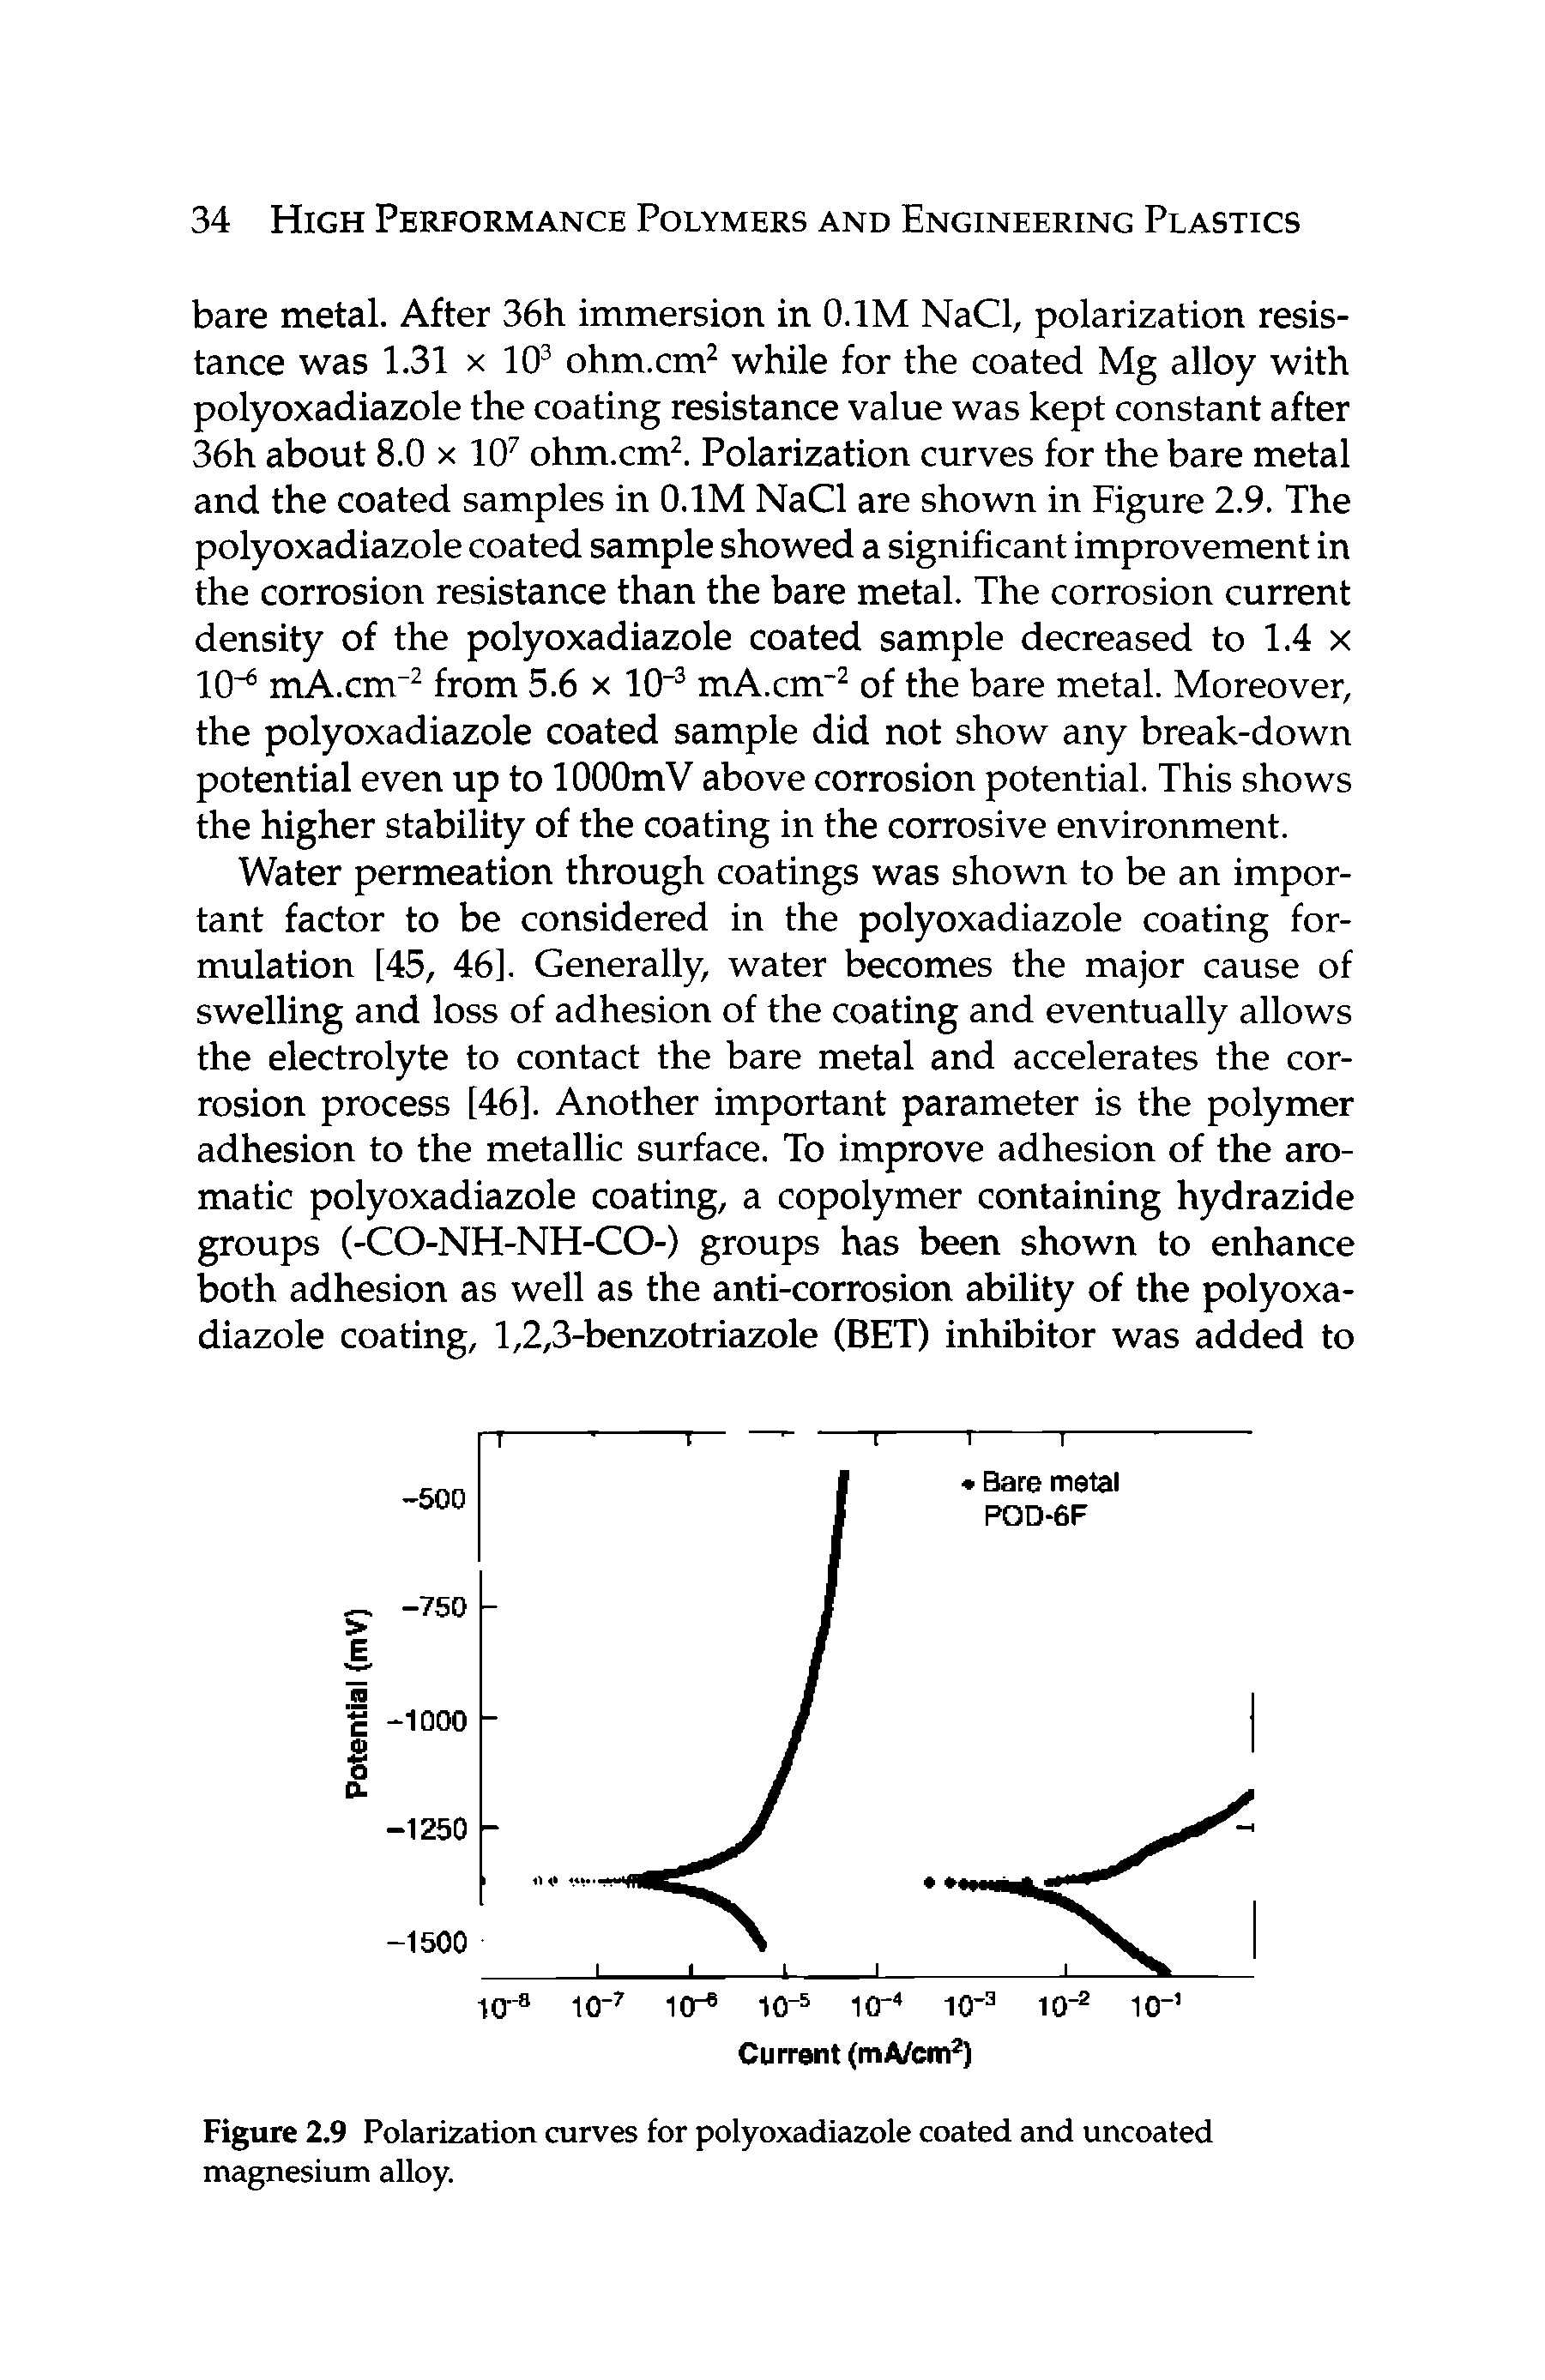 Figure 2.9 Polarization curves for polyoxadiazole coated and uncoated magnesium alloy.